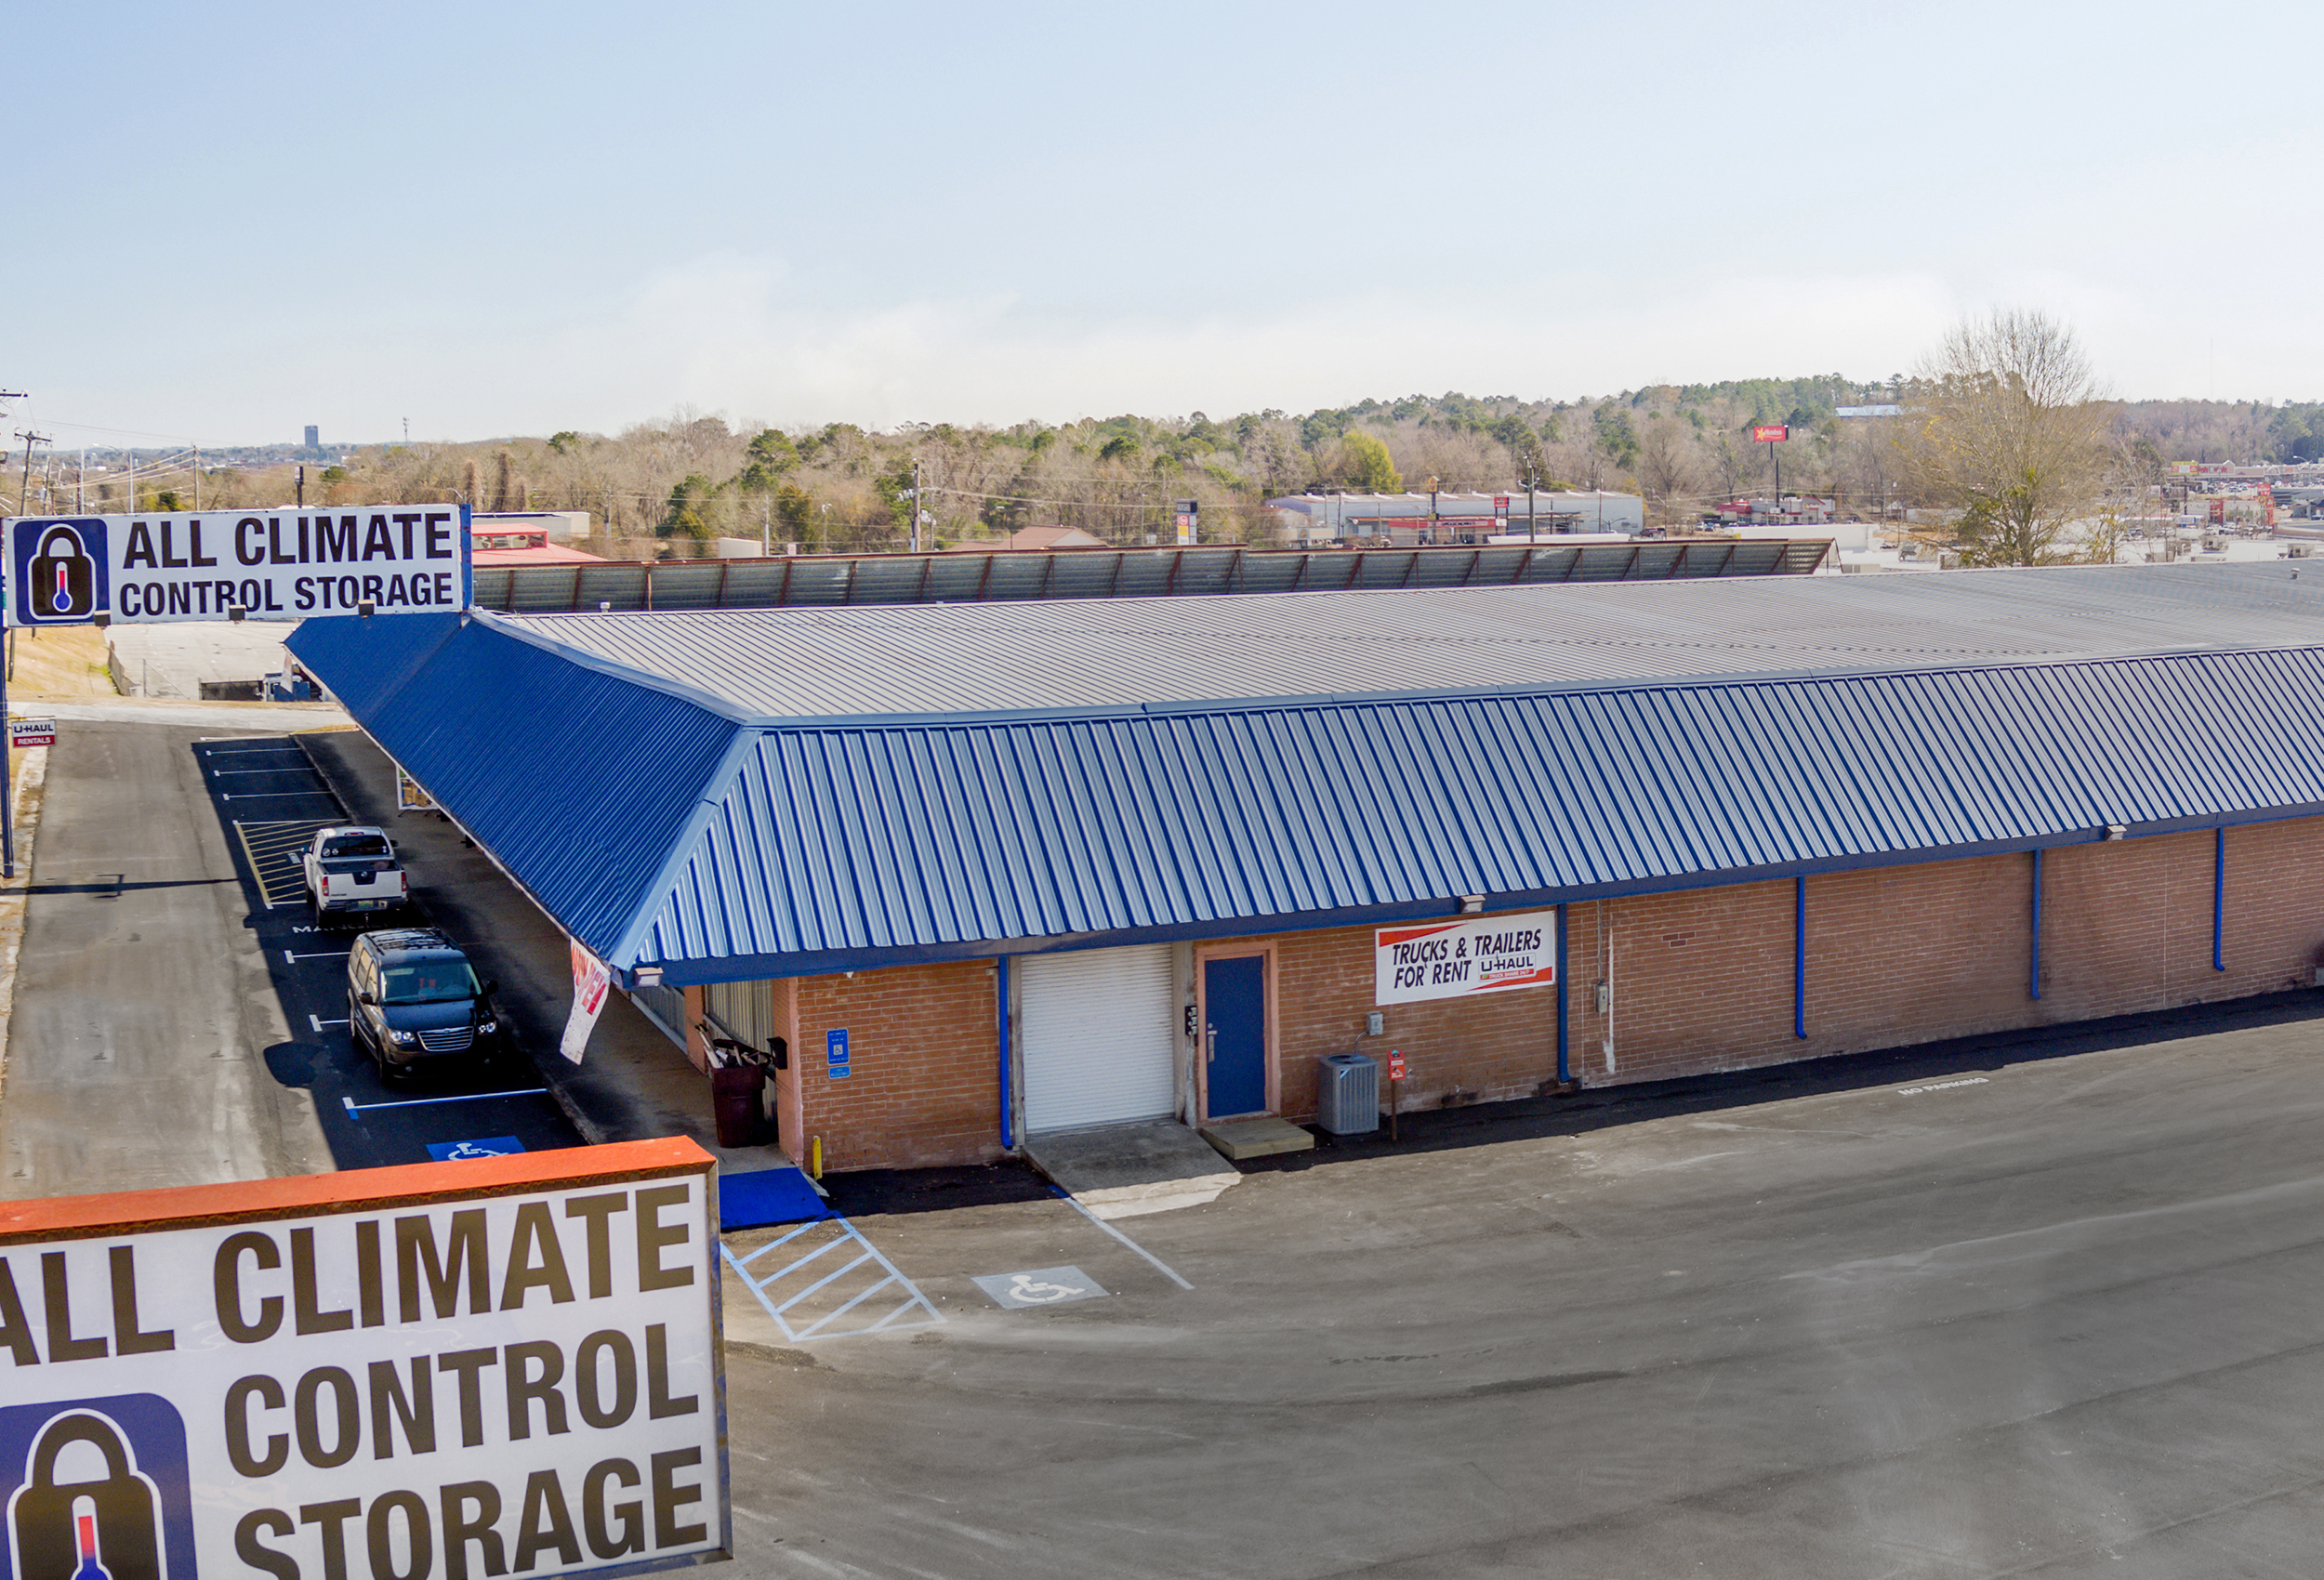 All Climate Control Storage – Phenix City, AL